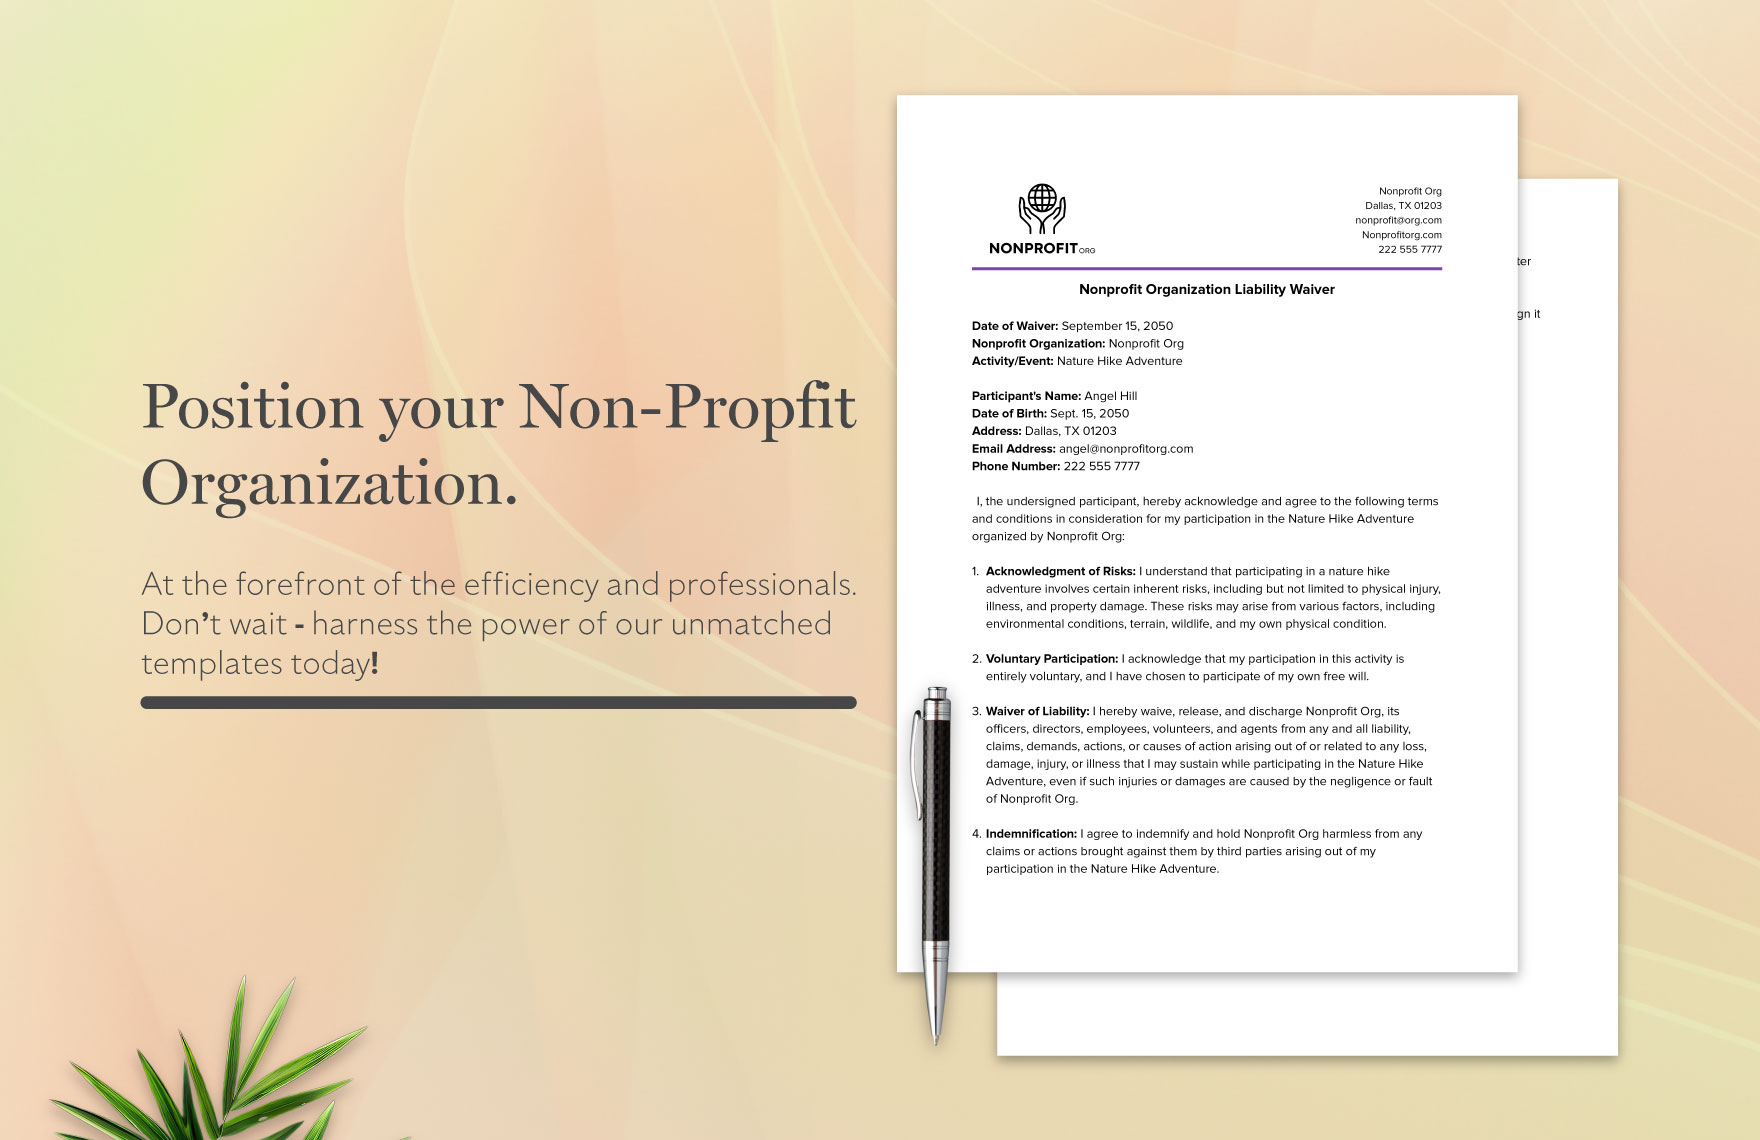  Nonprofit Organization Liability Waiver Template